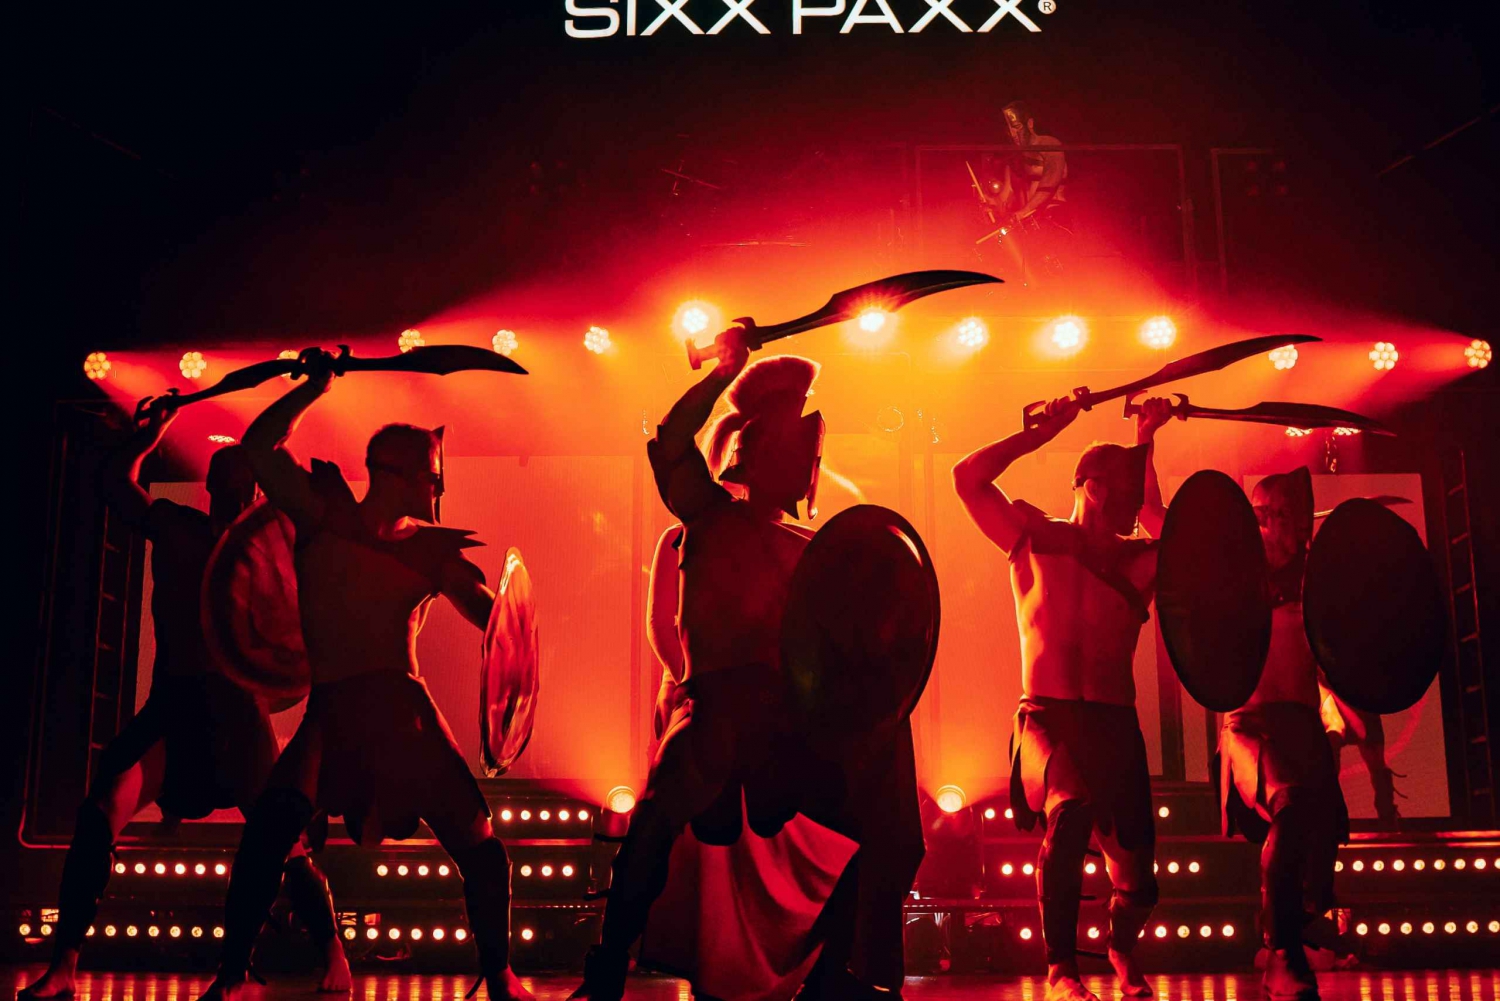 Berlin: SIXX PAXX Theater Show Ticket